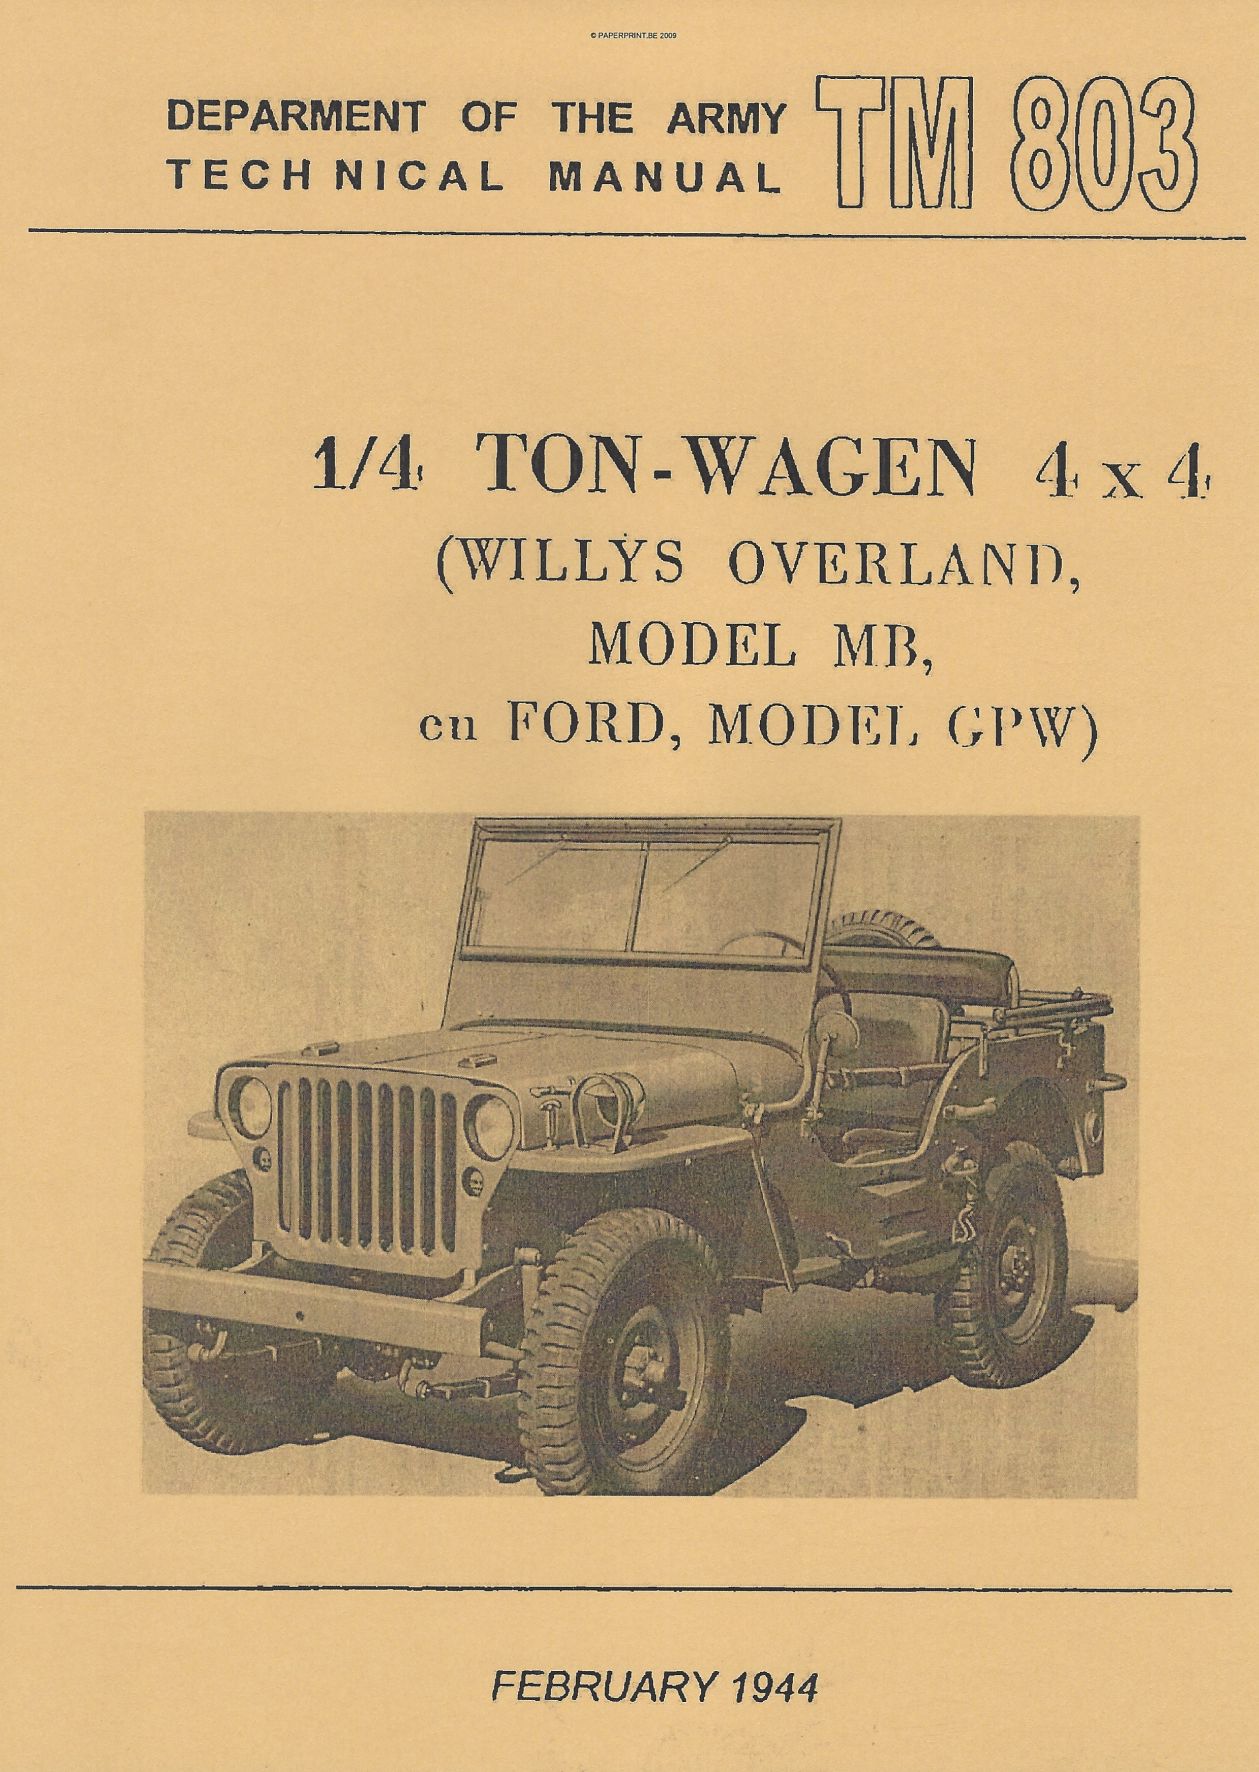 TM 9-803 NL ¼ TON - WAGEN 4x4 (WILLYS-OVERLAND MB EN FORD GPW)